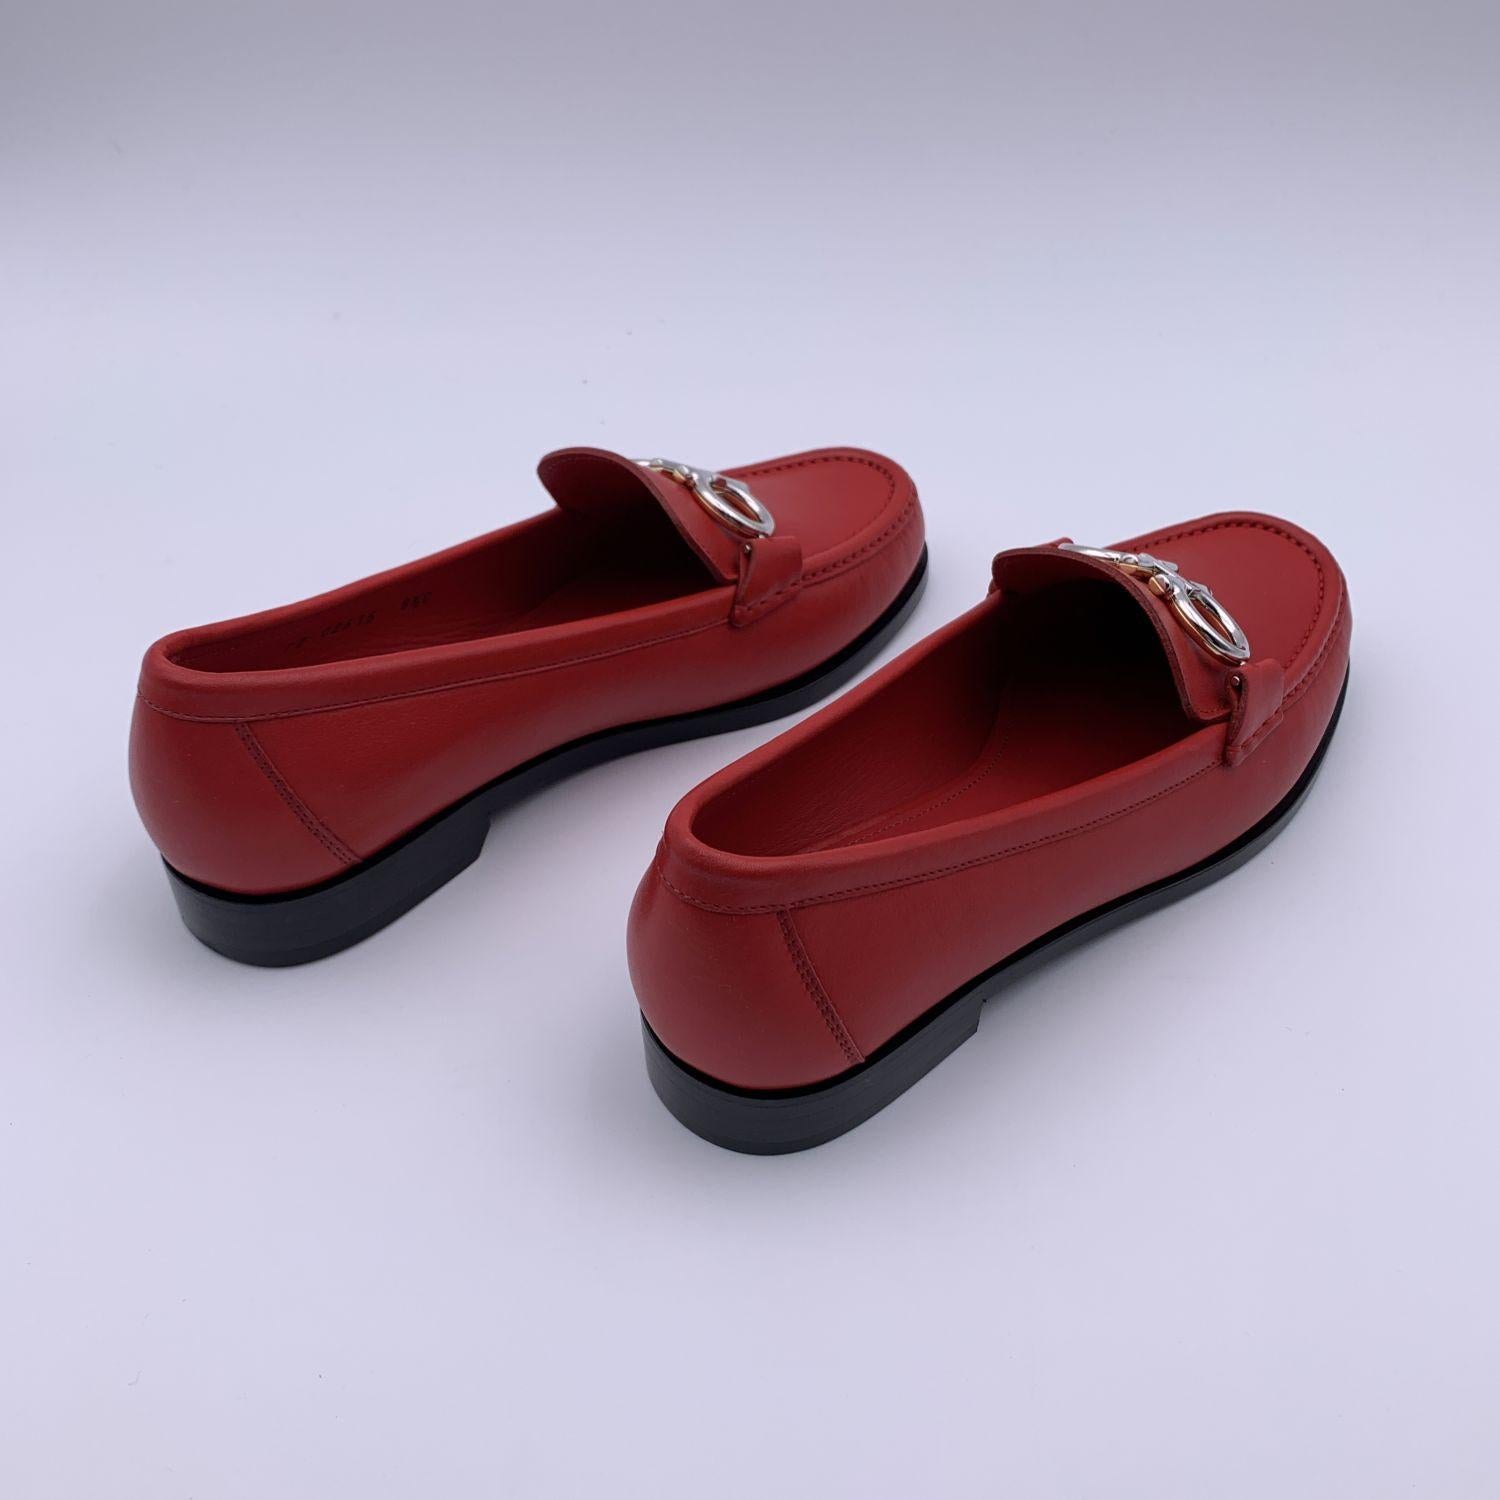 Salvatore Ferragamo Leather Rolo Loafers Moccassins Size 10C 40.5C In New Condition In Rome, Rome